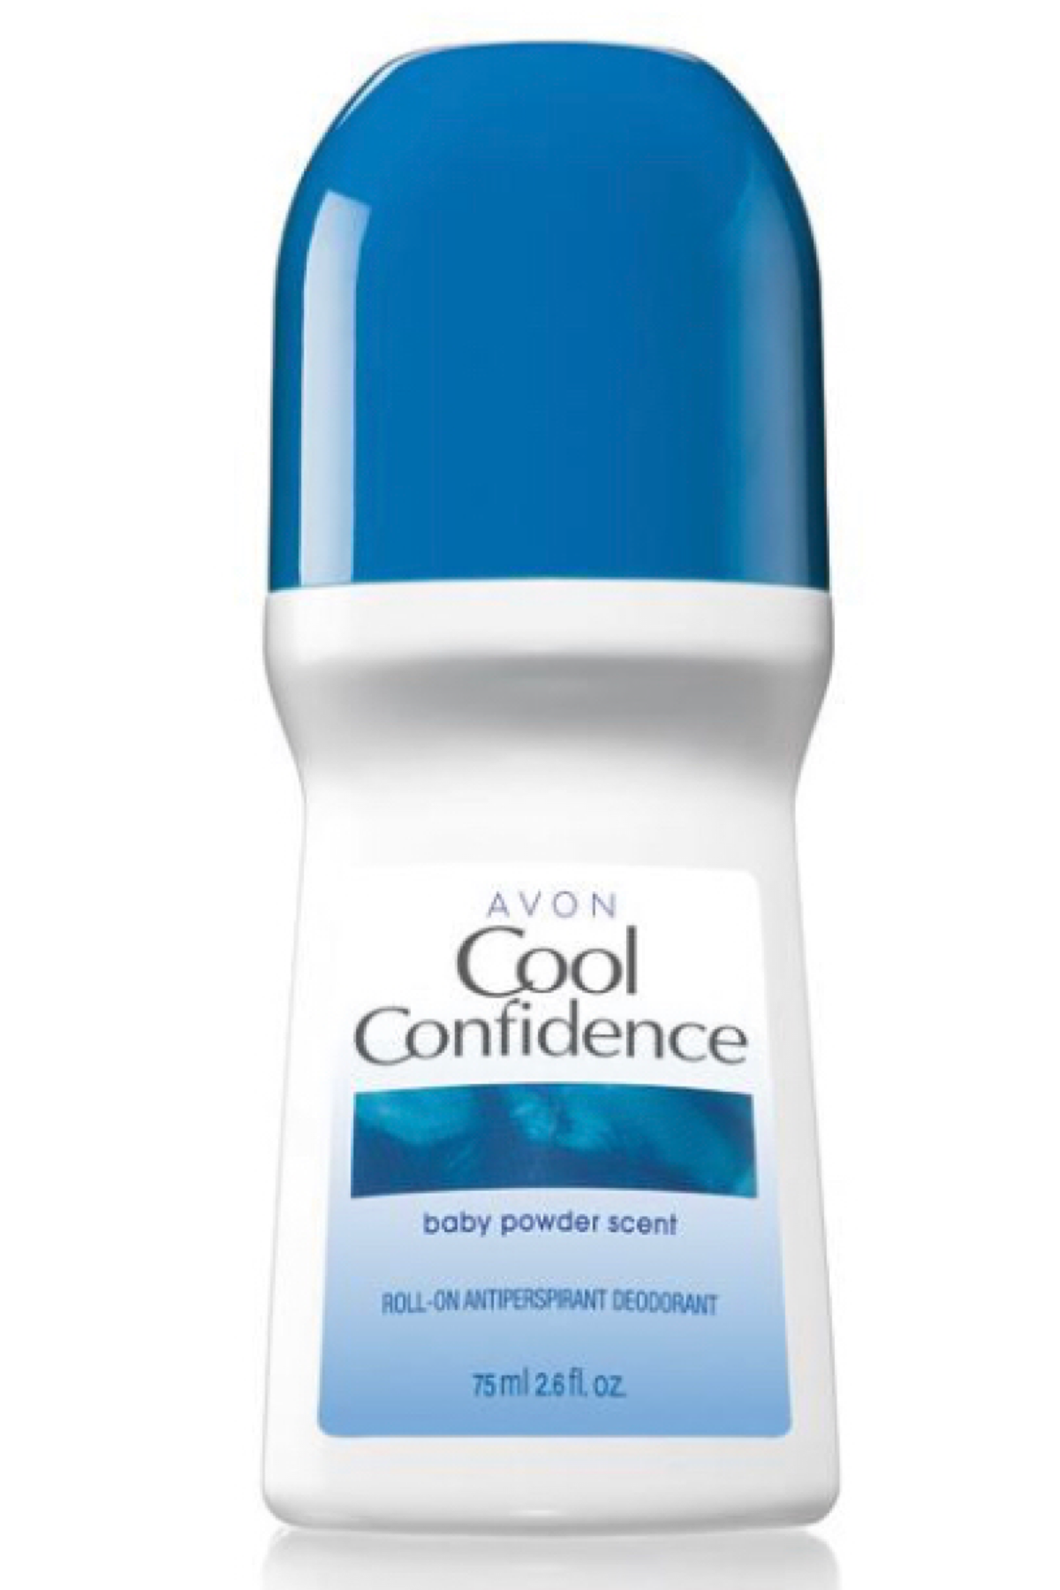 Cool Confidence Baby Powder Roll-On Antiperspirant Deodorant 75ml